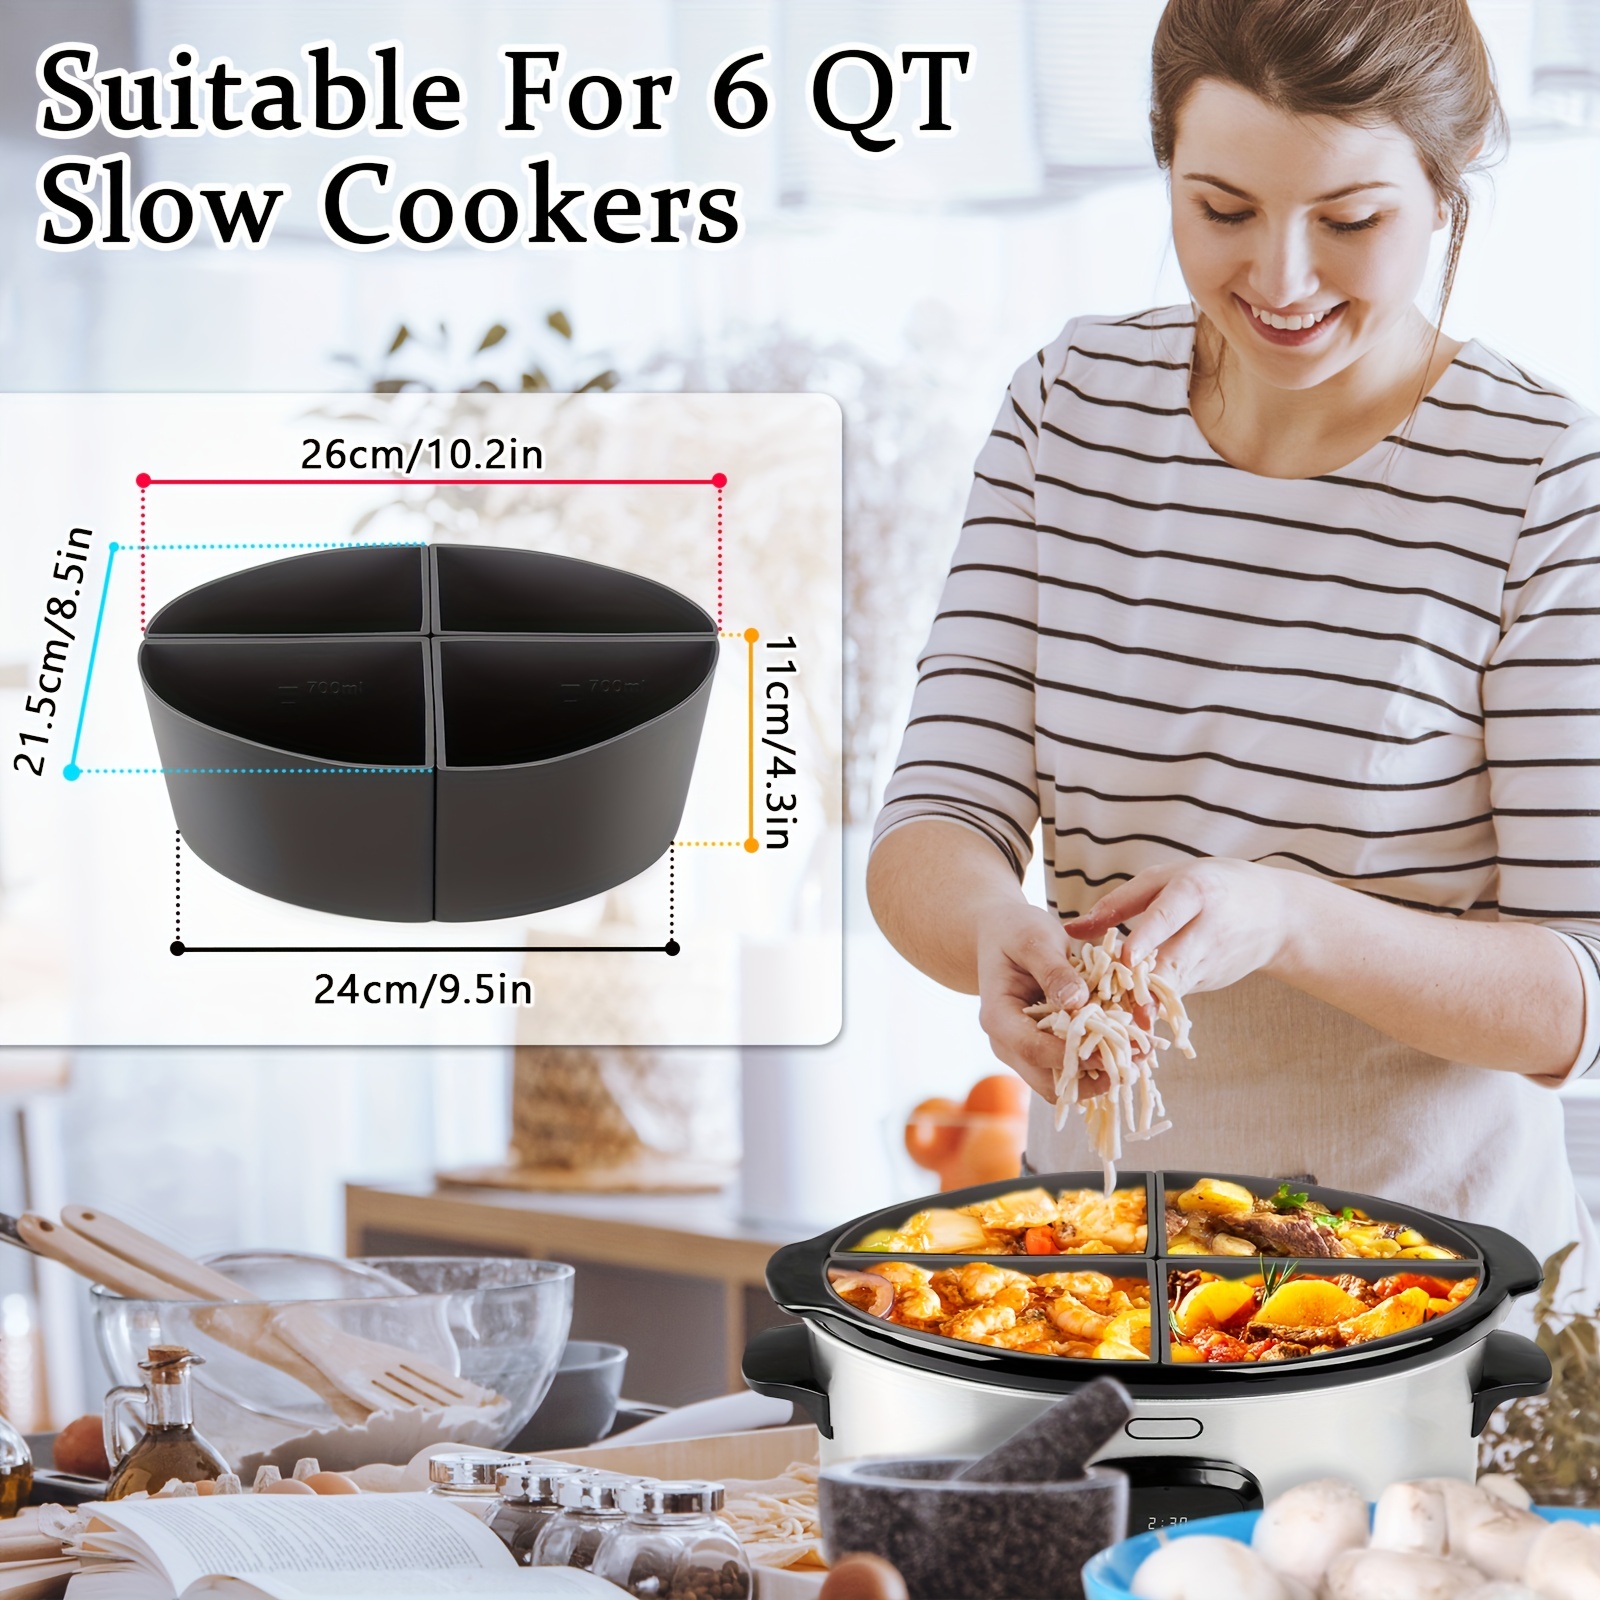  Silicone Slow Cooker Liner Fits Crock-pot 6 Quart Oval